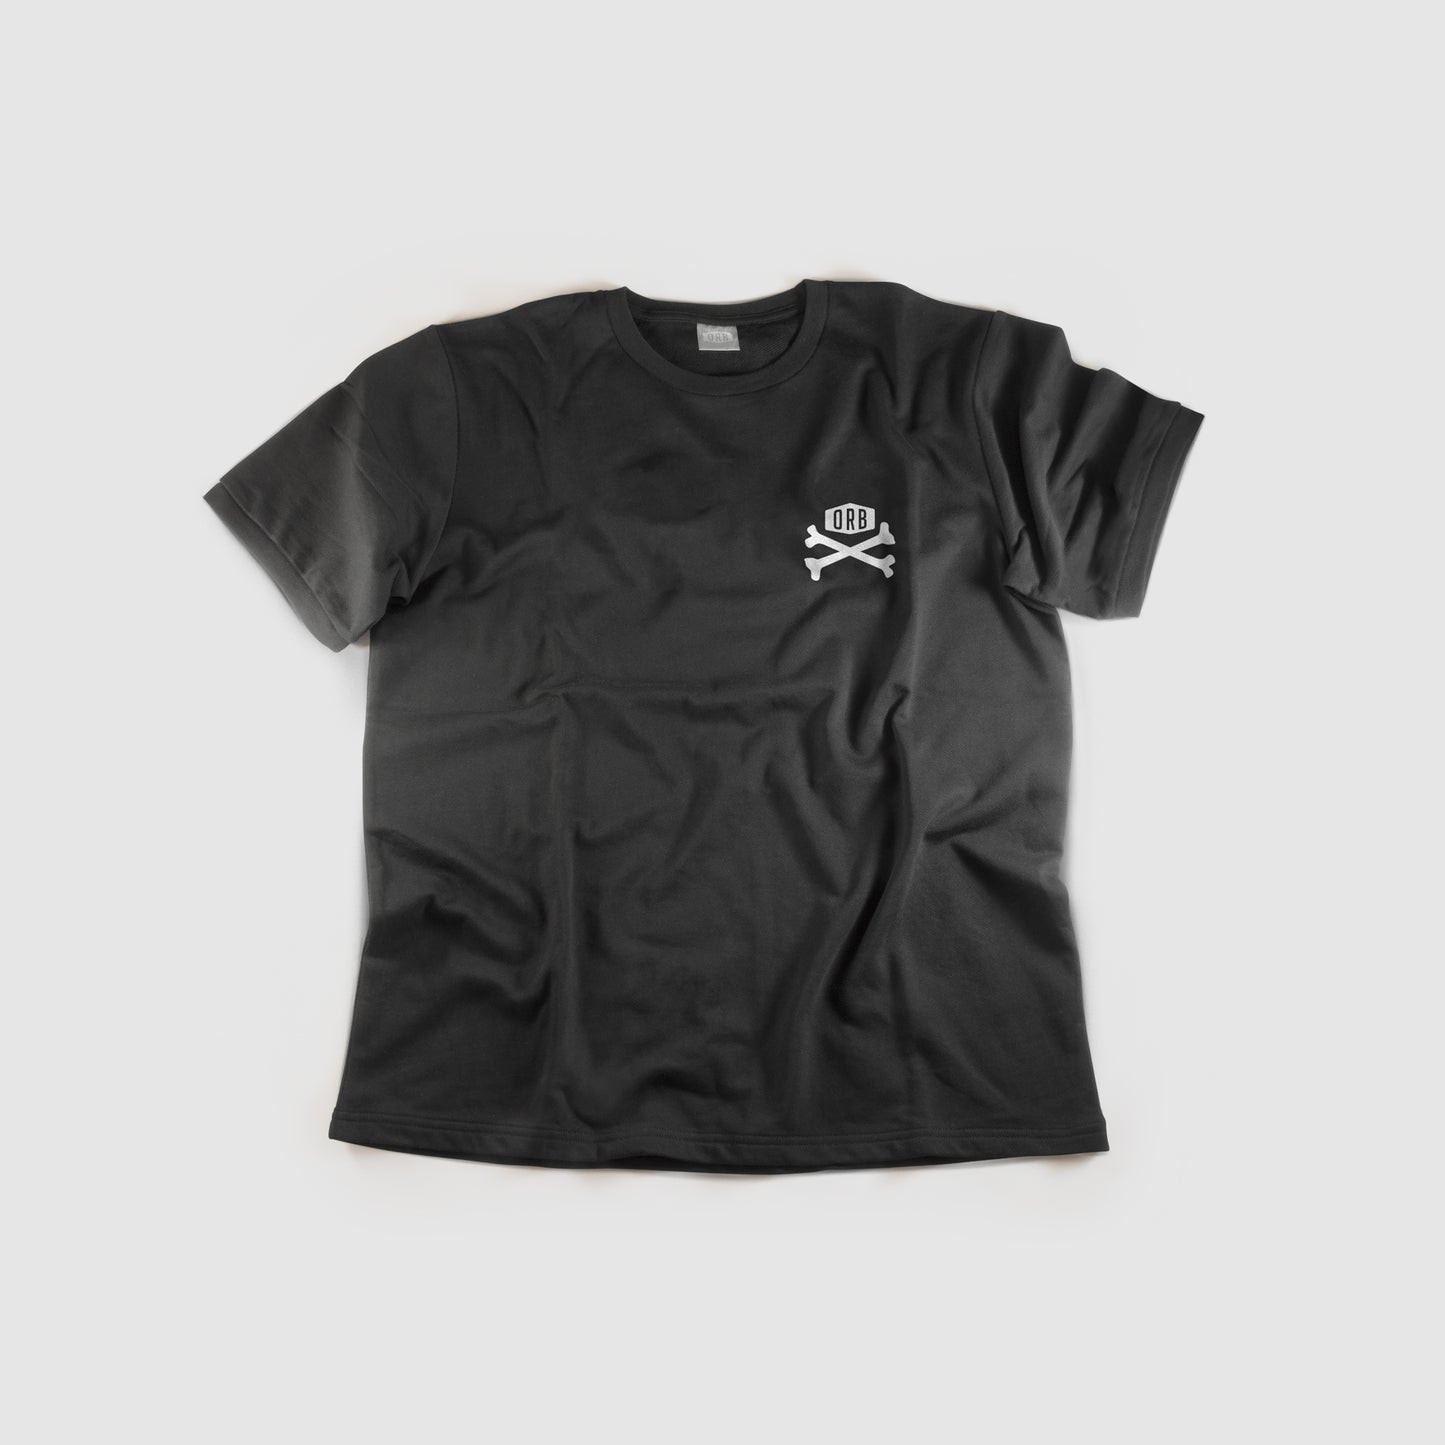 Off-Road Bedding Crossbones - Black Tee Shirts